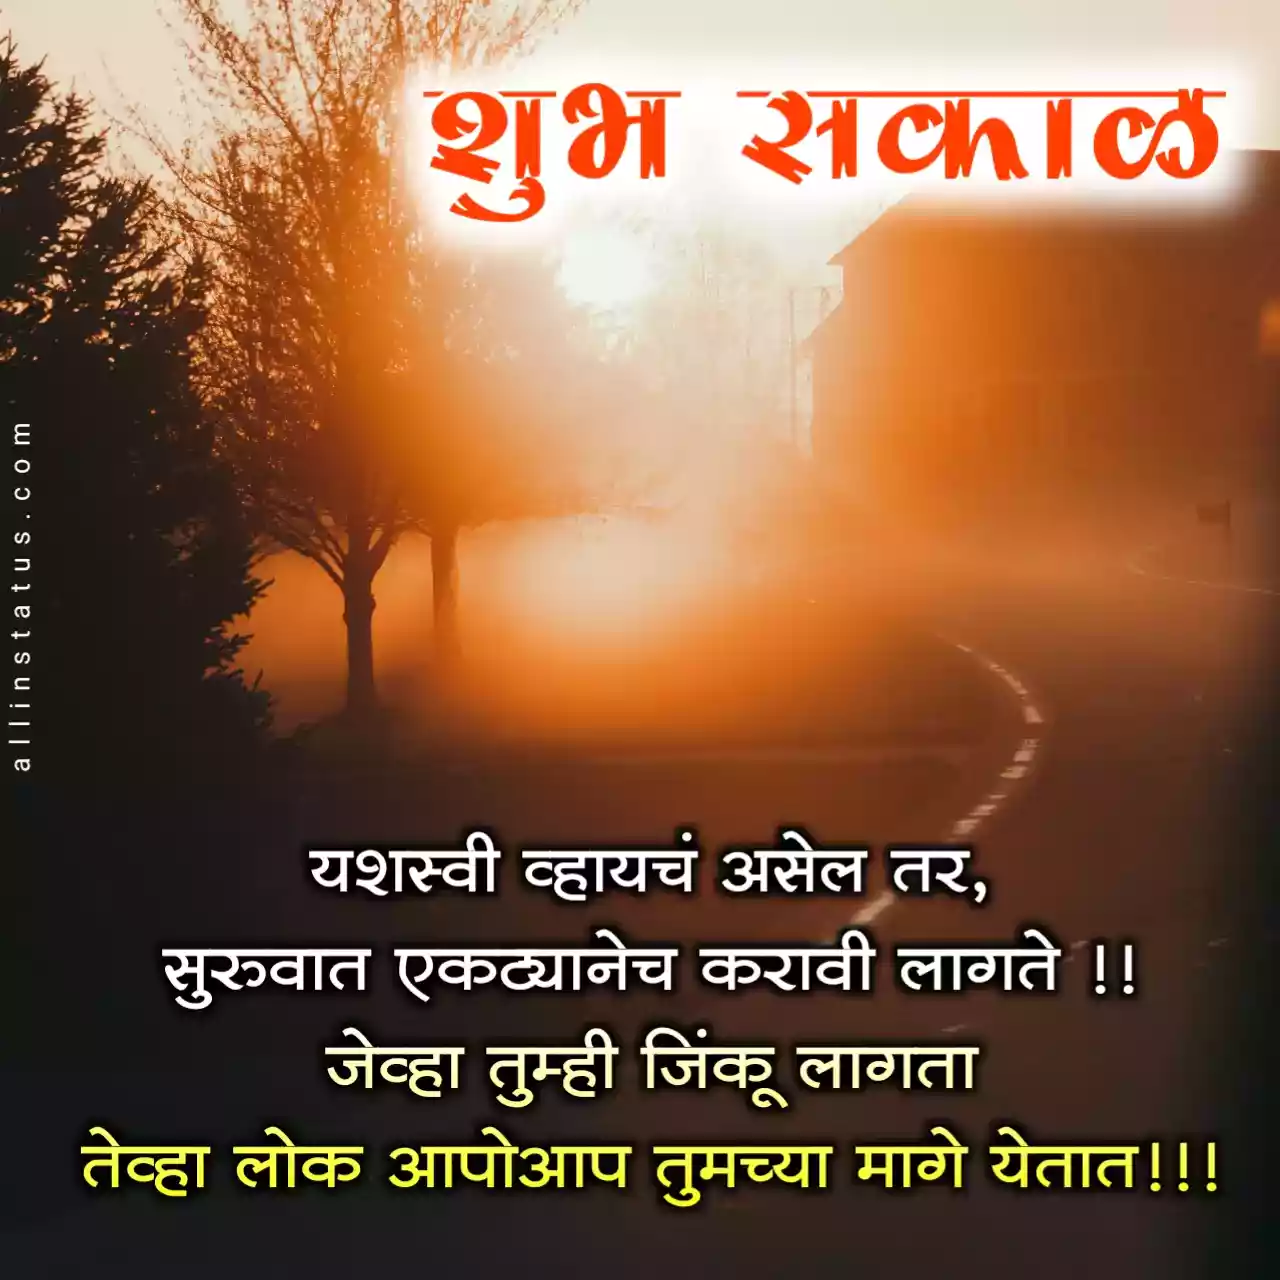 Good morning quotes in marathi